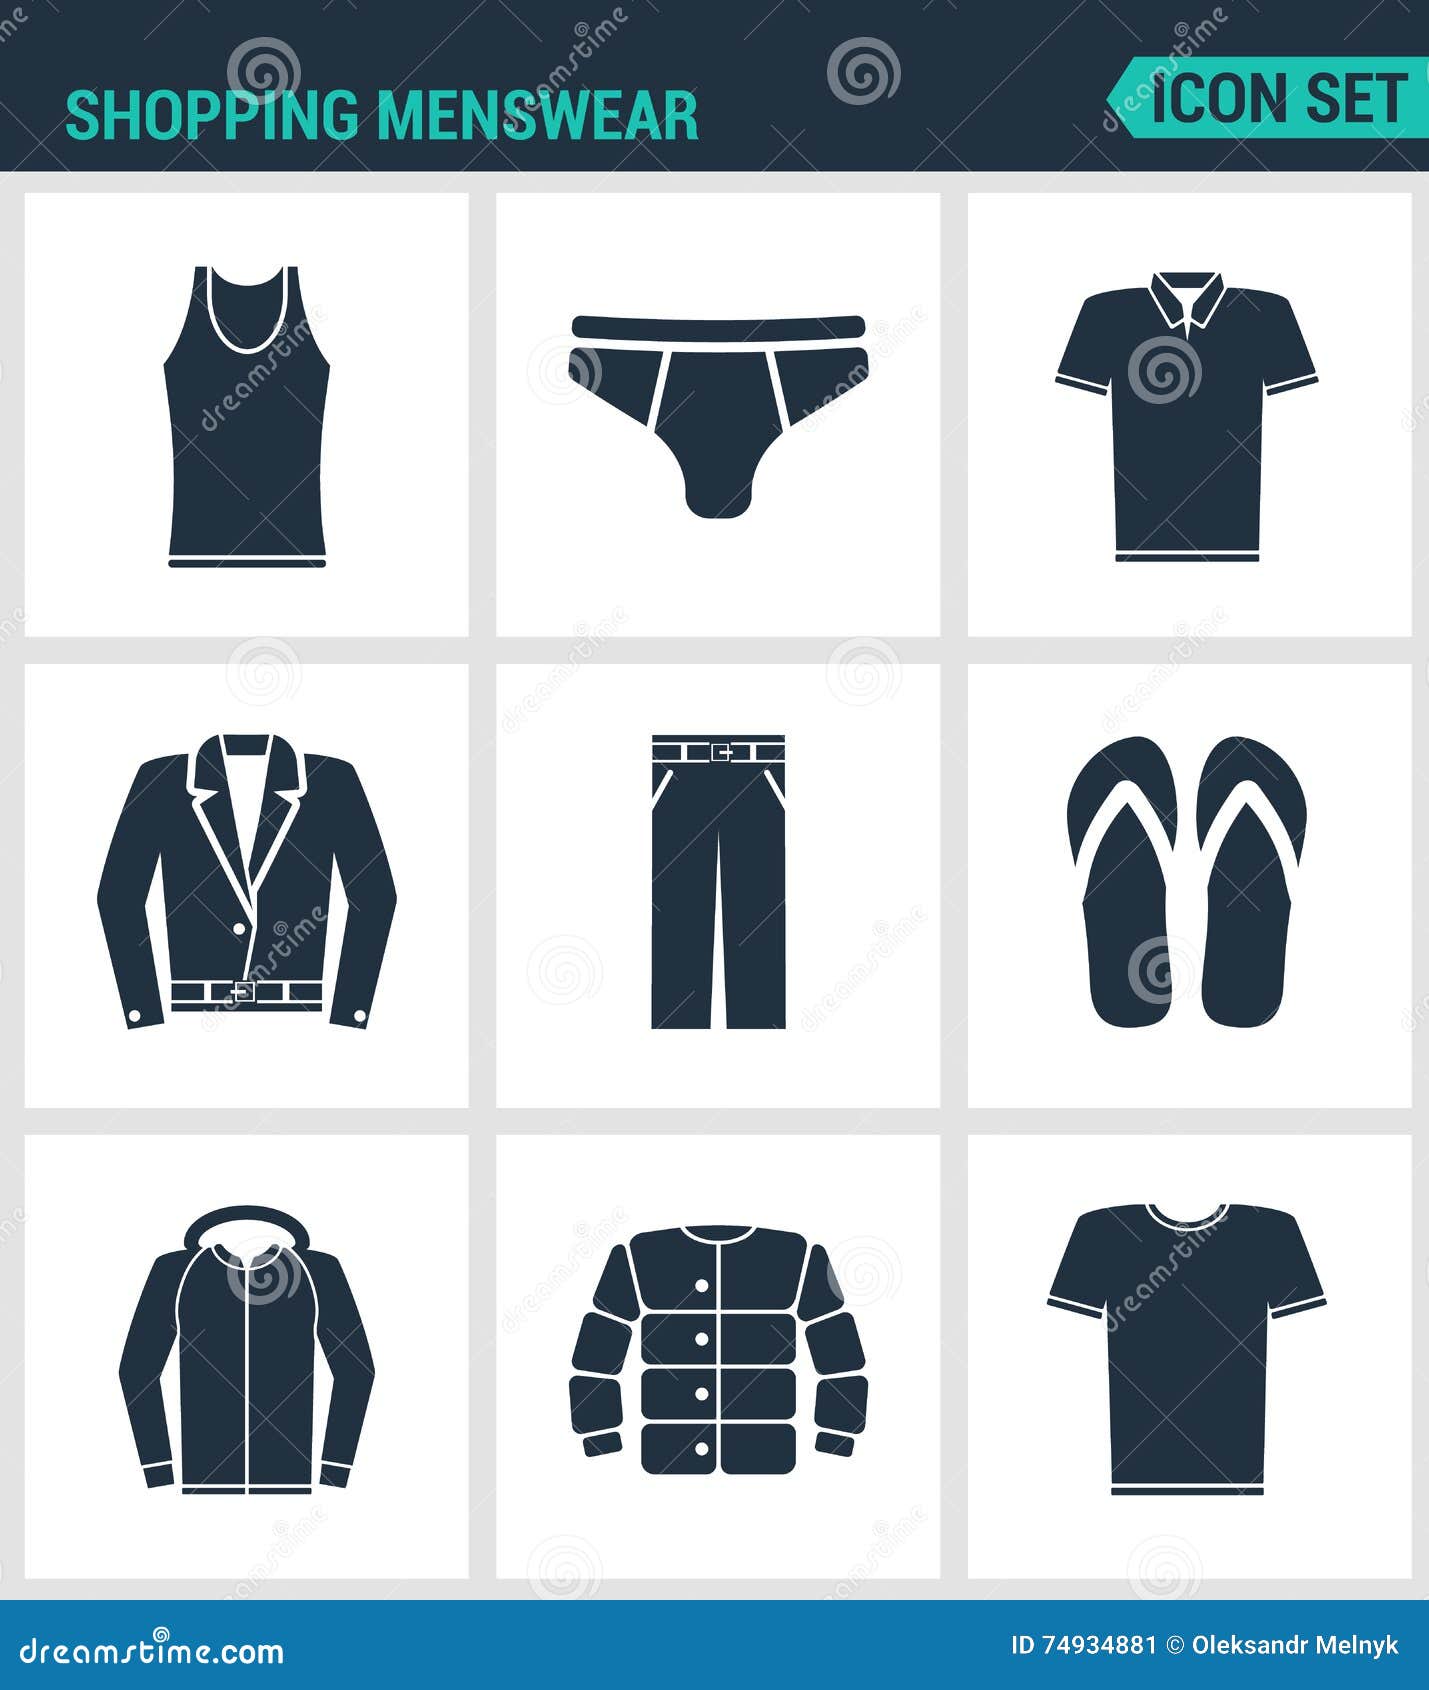 set of modern icons. shopping menswear t-shirt, skirts, pants, sneakers, leather jacket, shirt, jacket. black signs